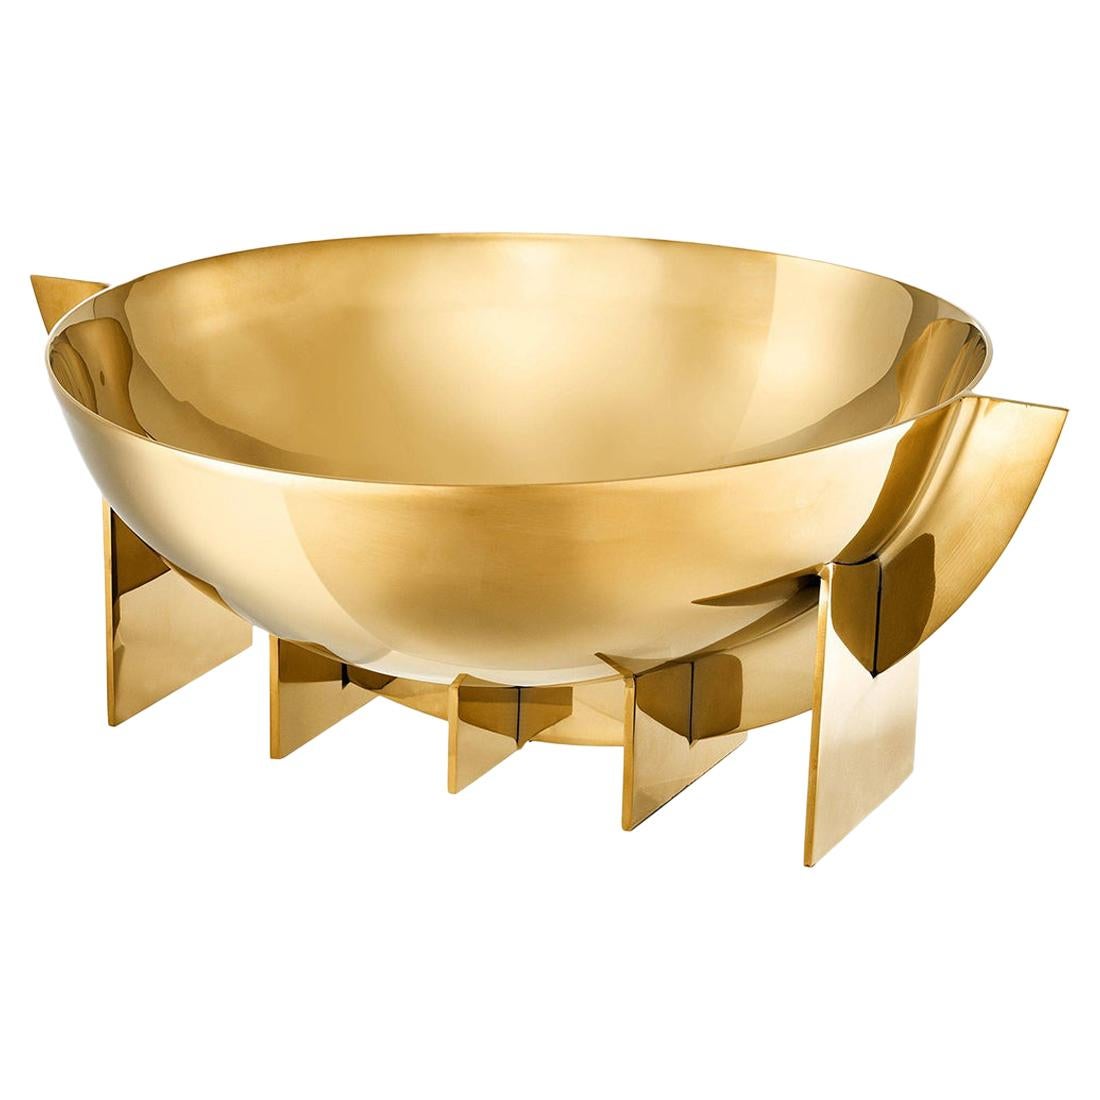 Gotham Gold Bowl For Sale